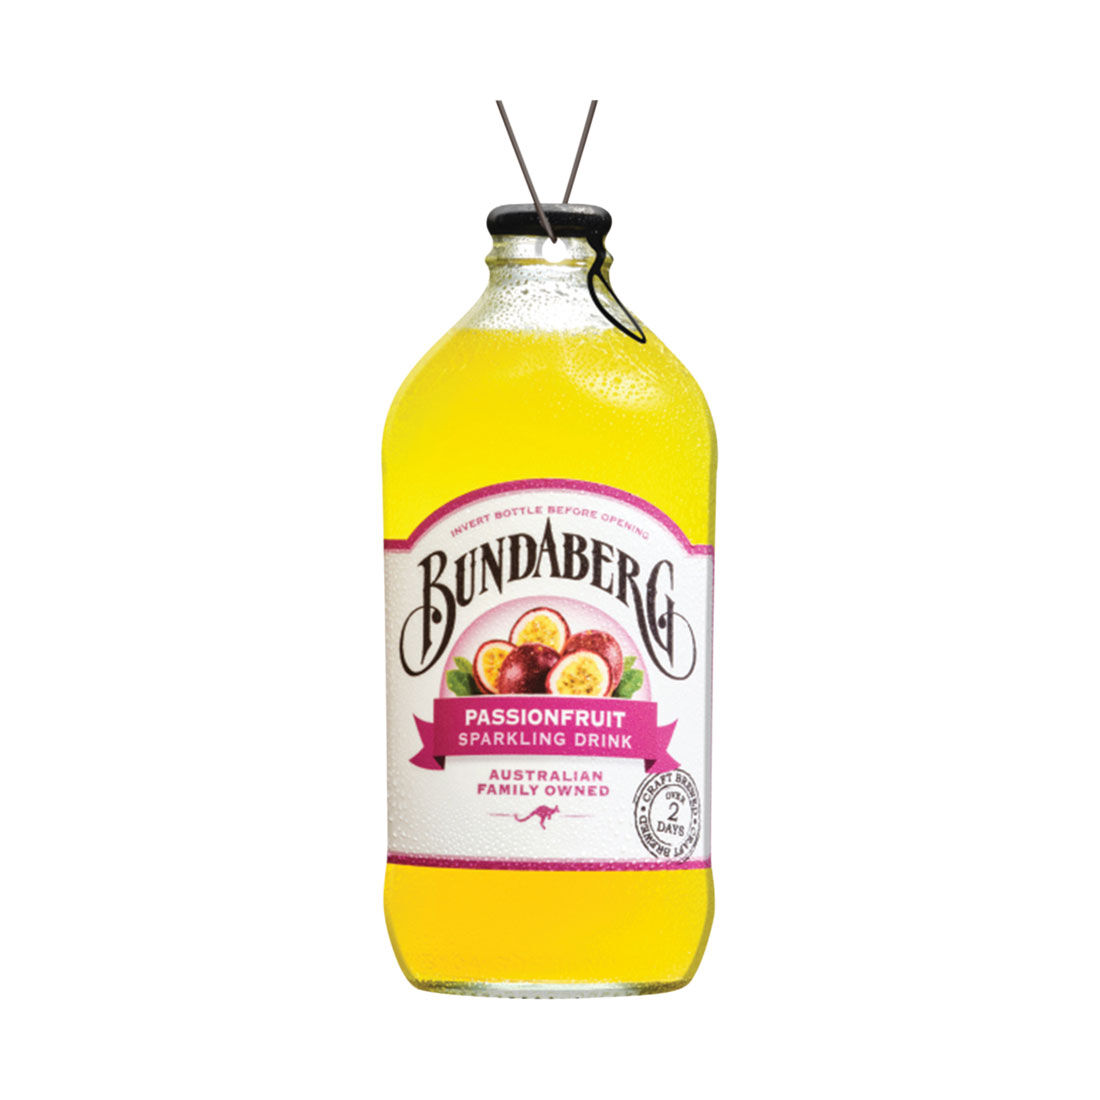 Bundaberg Carded Air Freshener - Passionfruit, , scaau_hi-res